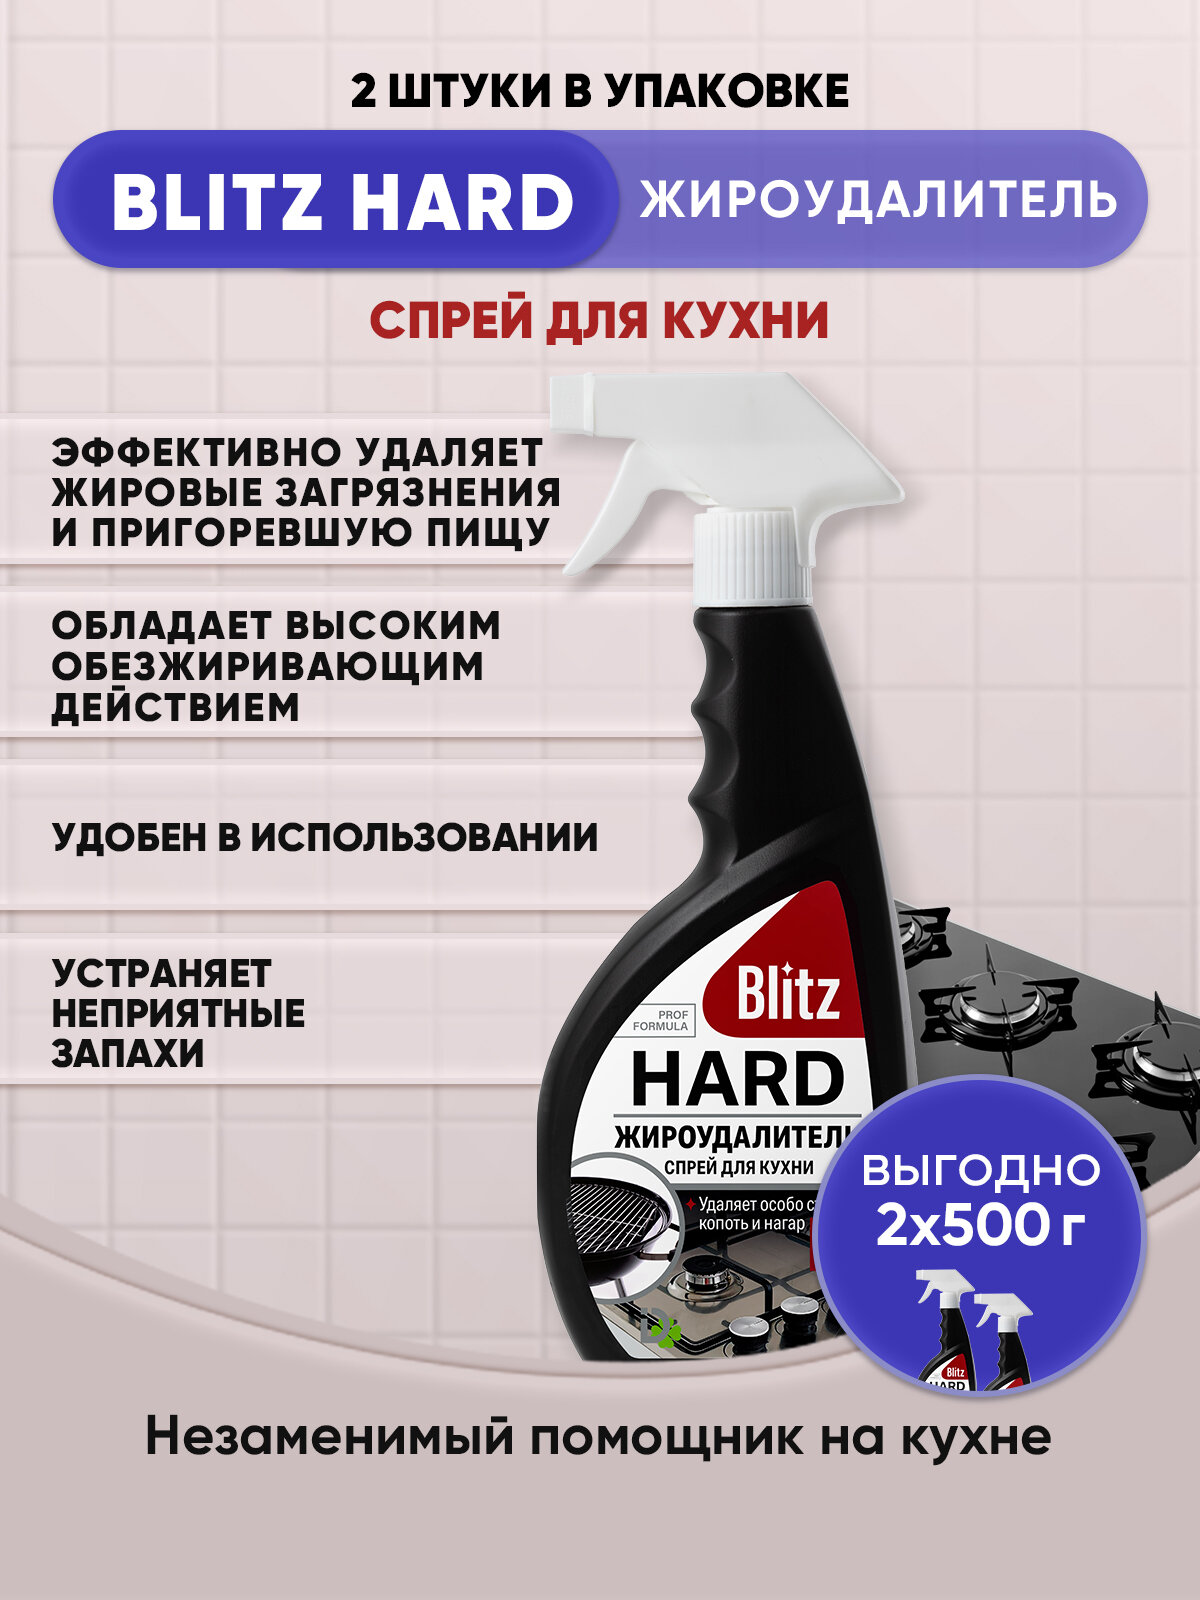 BLITZ HARD Жироудалитель спрей для кухни 500г/2шт